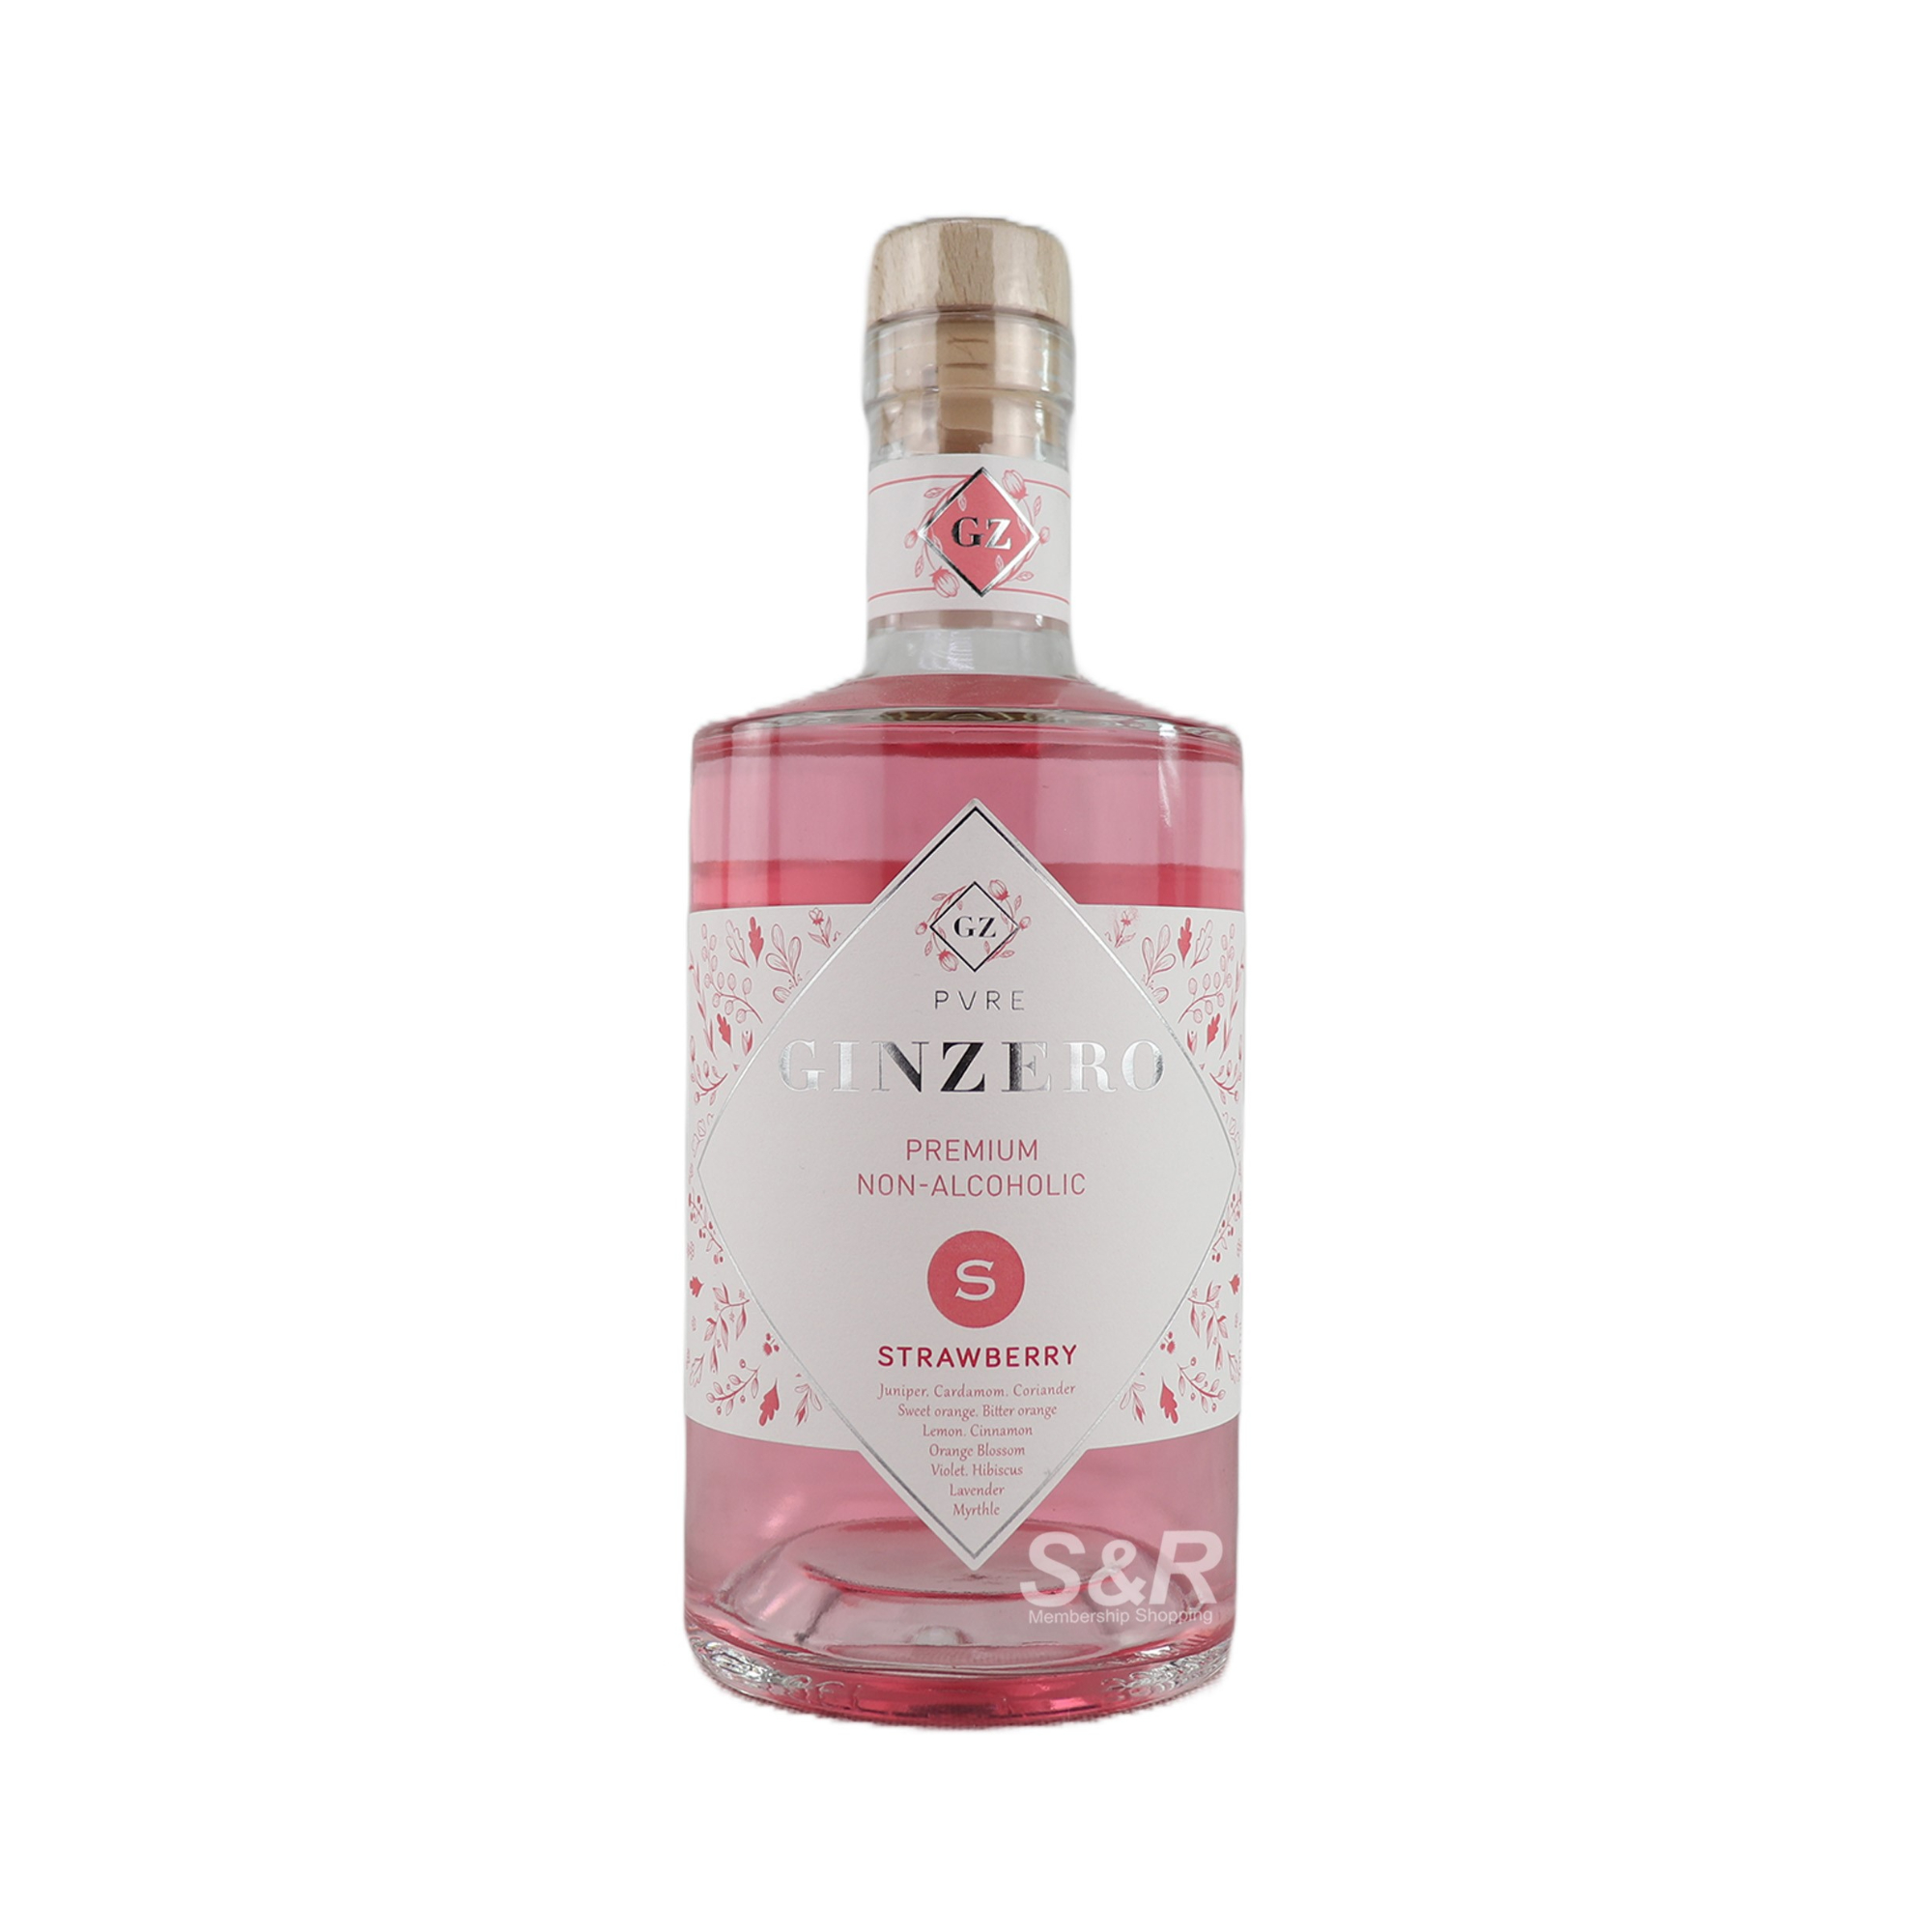 PVRE Gin Zero 12 Botanics Strawberry Premium Non-Alcoholic Liquor 700mL